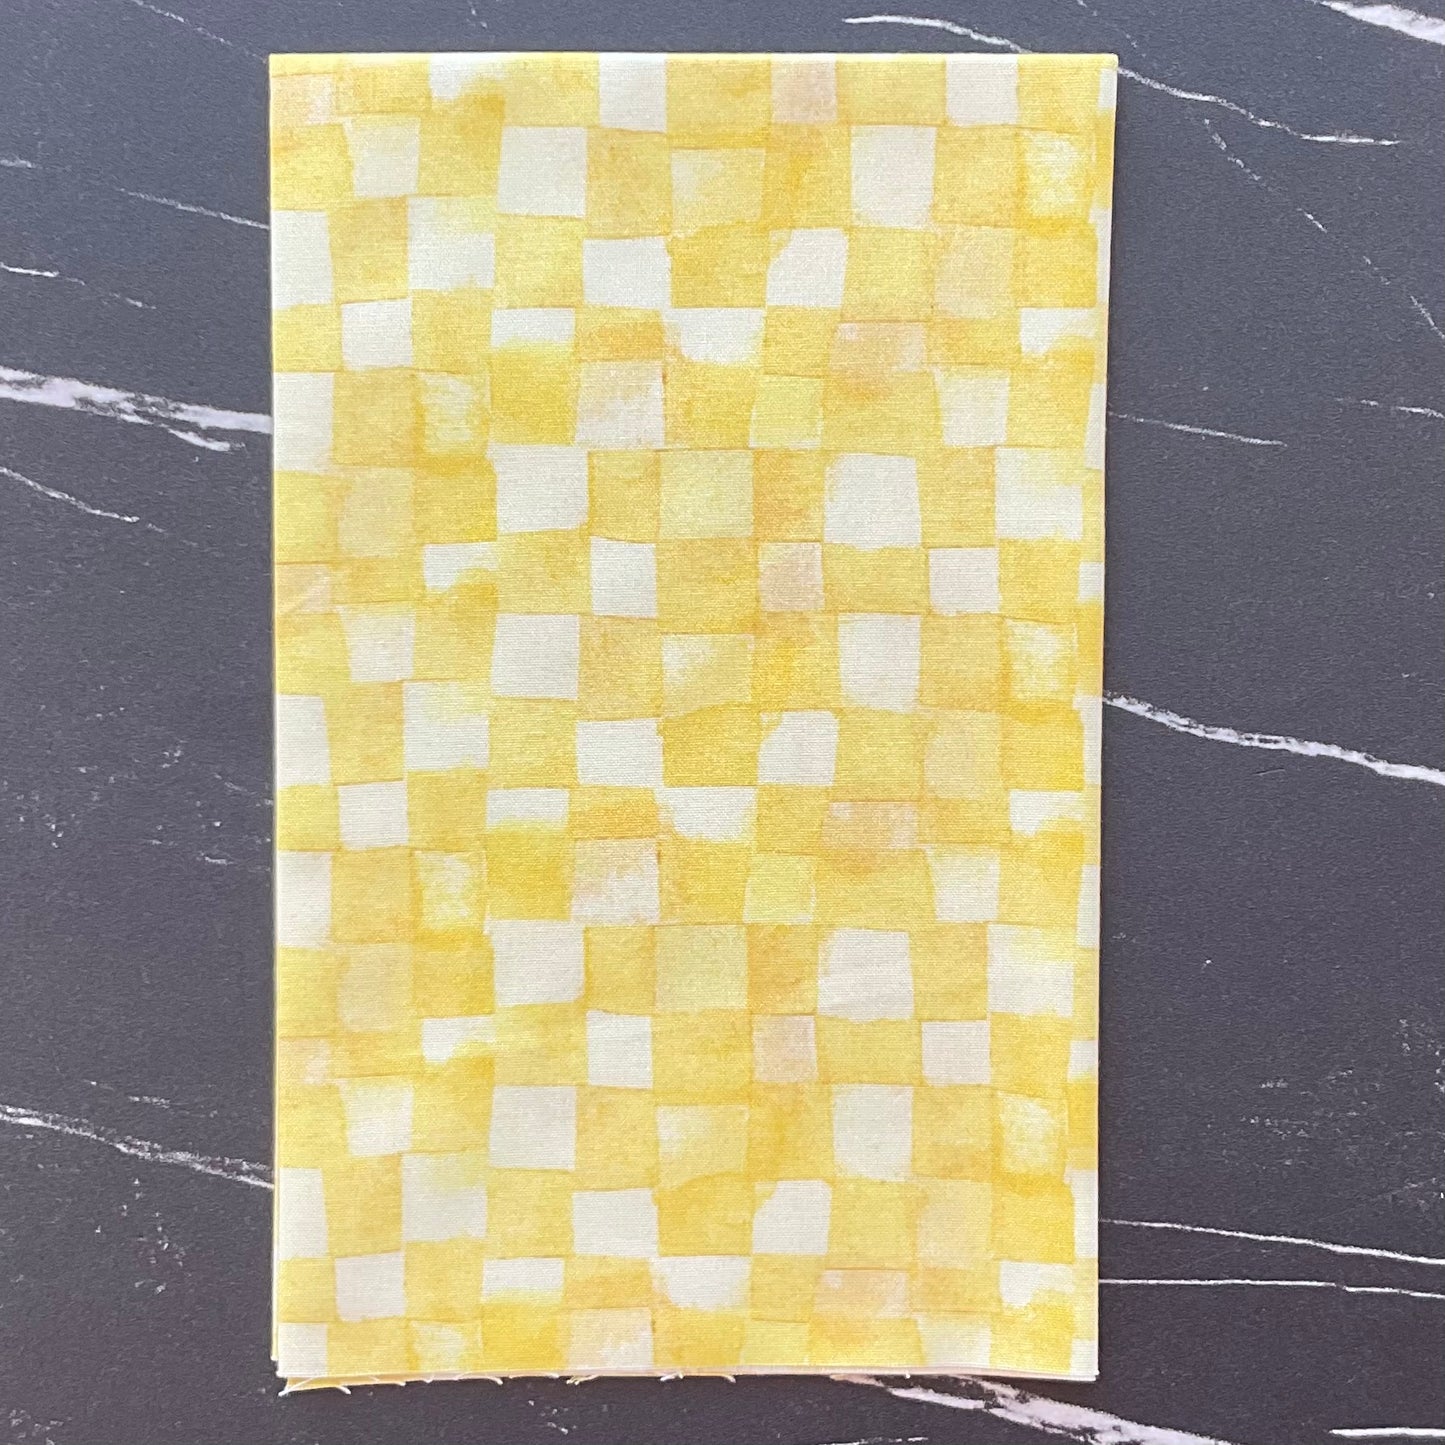 Connections by Maria Carluccio : Checkerboard Yellow 53723D-11